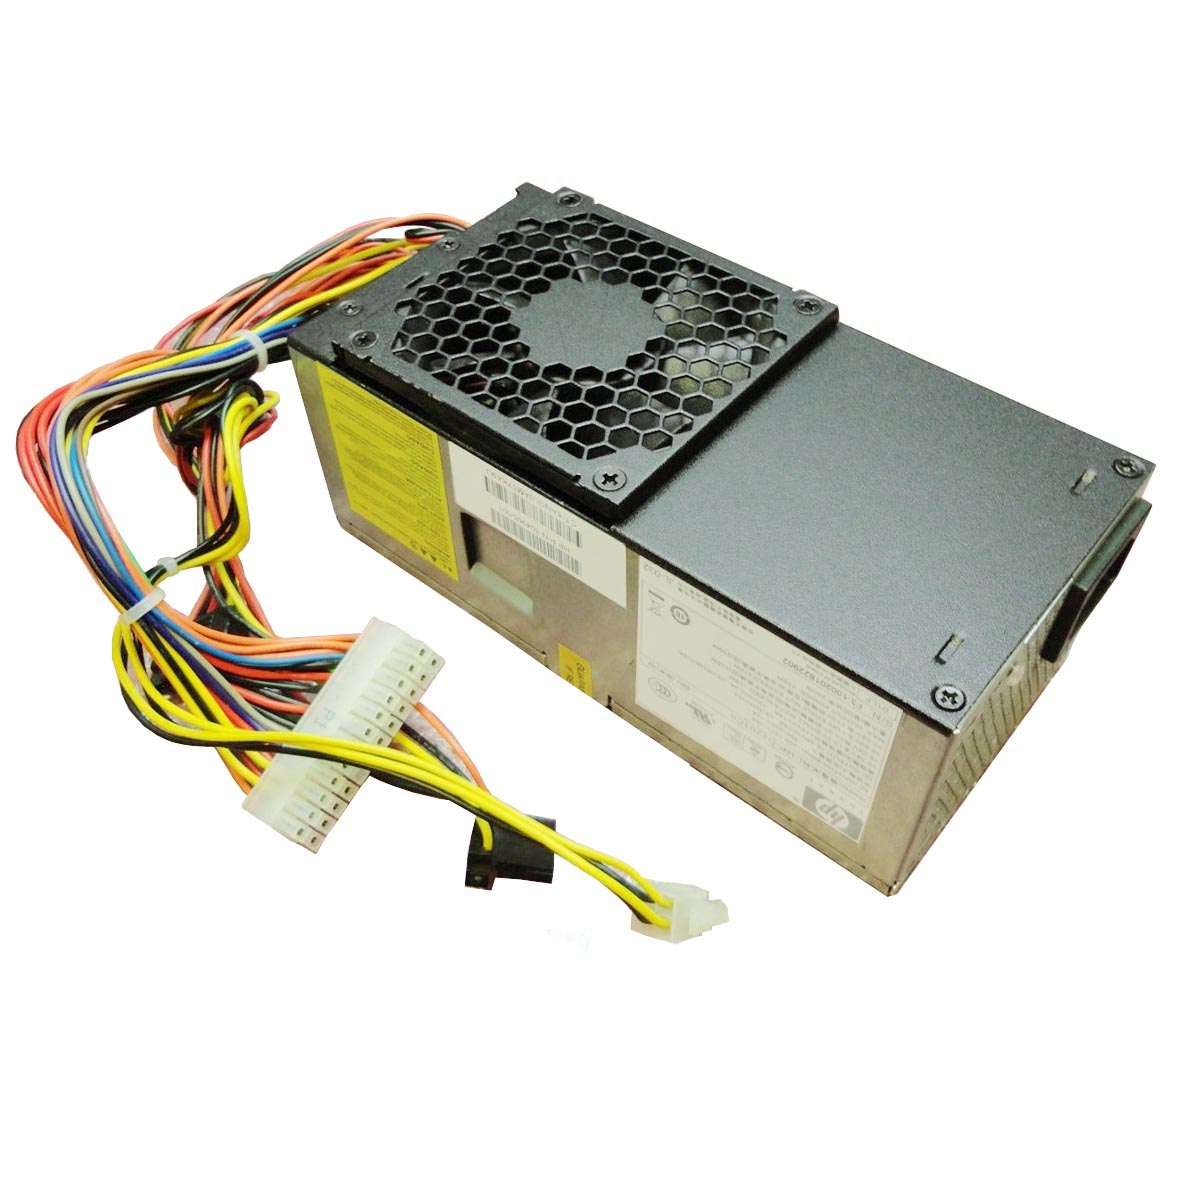 504965-001,504966-001 PC alimentation pour HP Desktop Power Supply unit PSU PC8044 SFF Small Form Factor 220W HP-D2201C0 Upgrade TFX0220D5WA